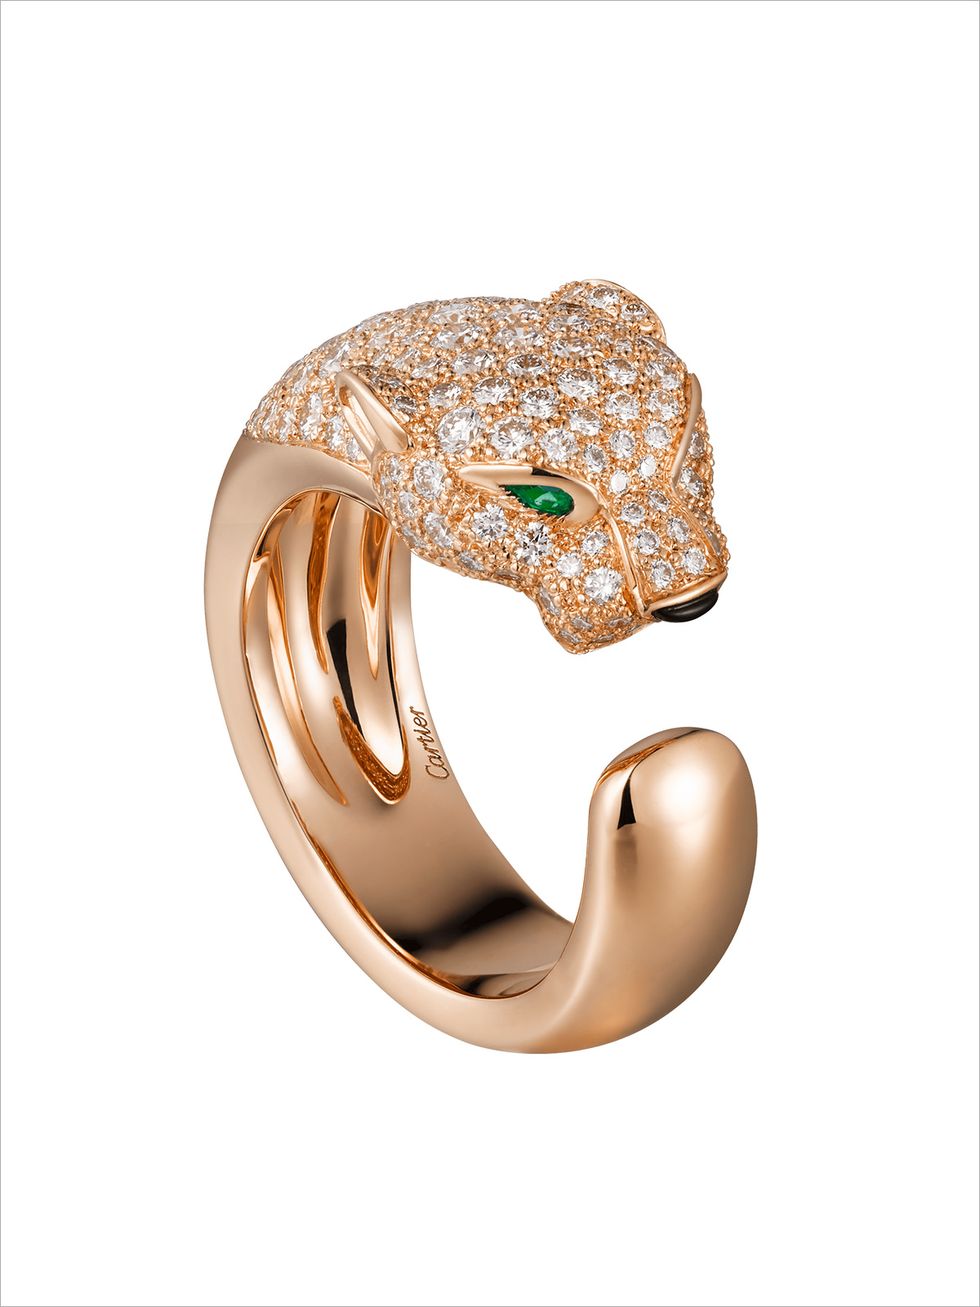 Ring, Jewellery, Fashion accessory, Gold, Metal, Engagement ring, Finger, Diamond, Snake, Gemstone, 